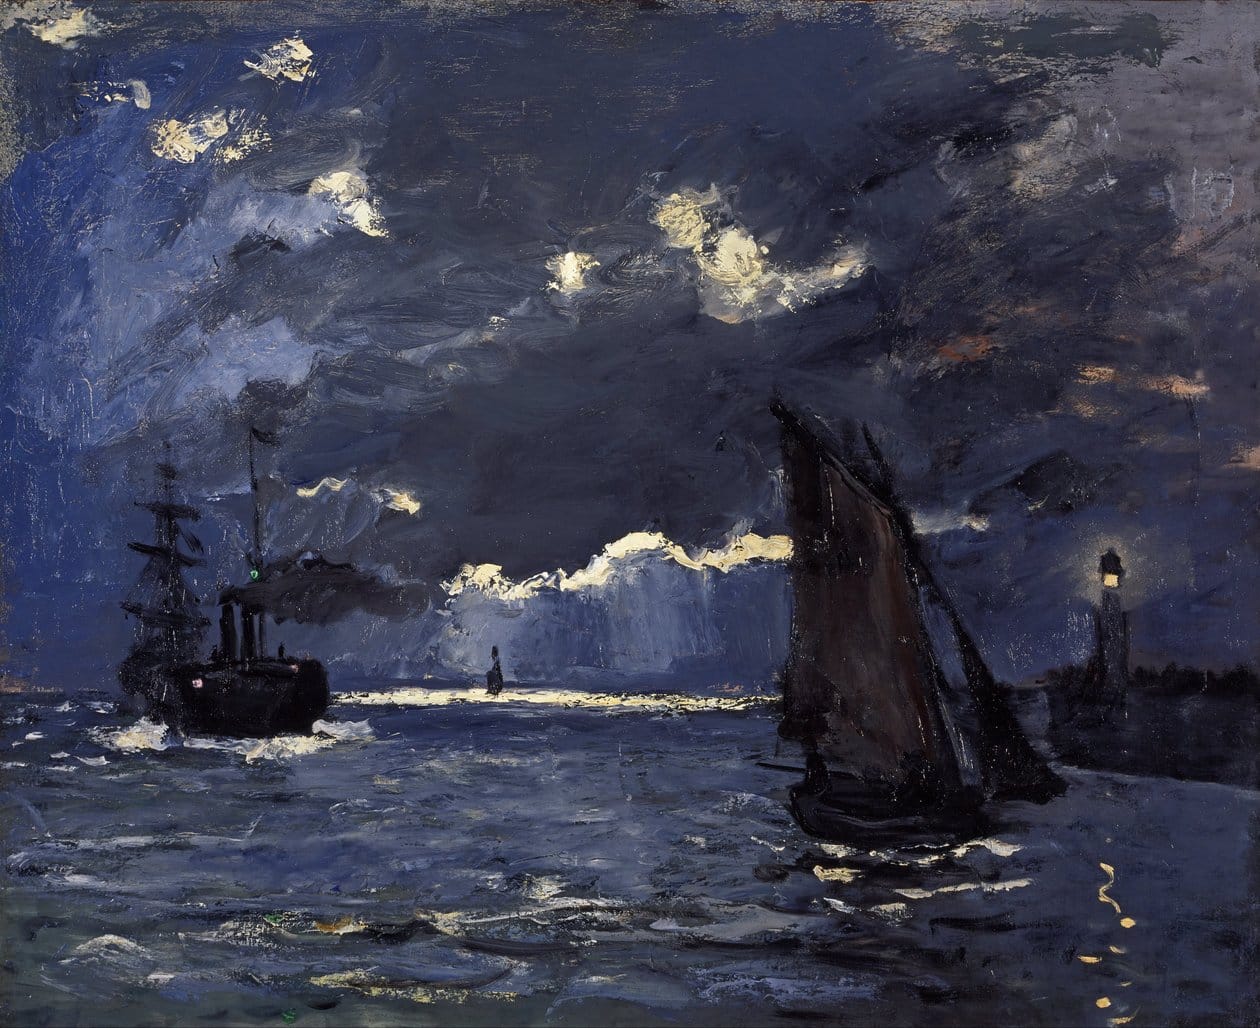 A Seascape, Shipping by Moonlight, von Claude Monet